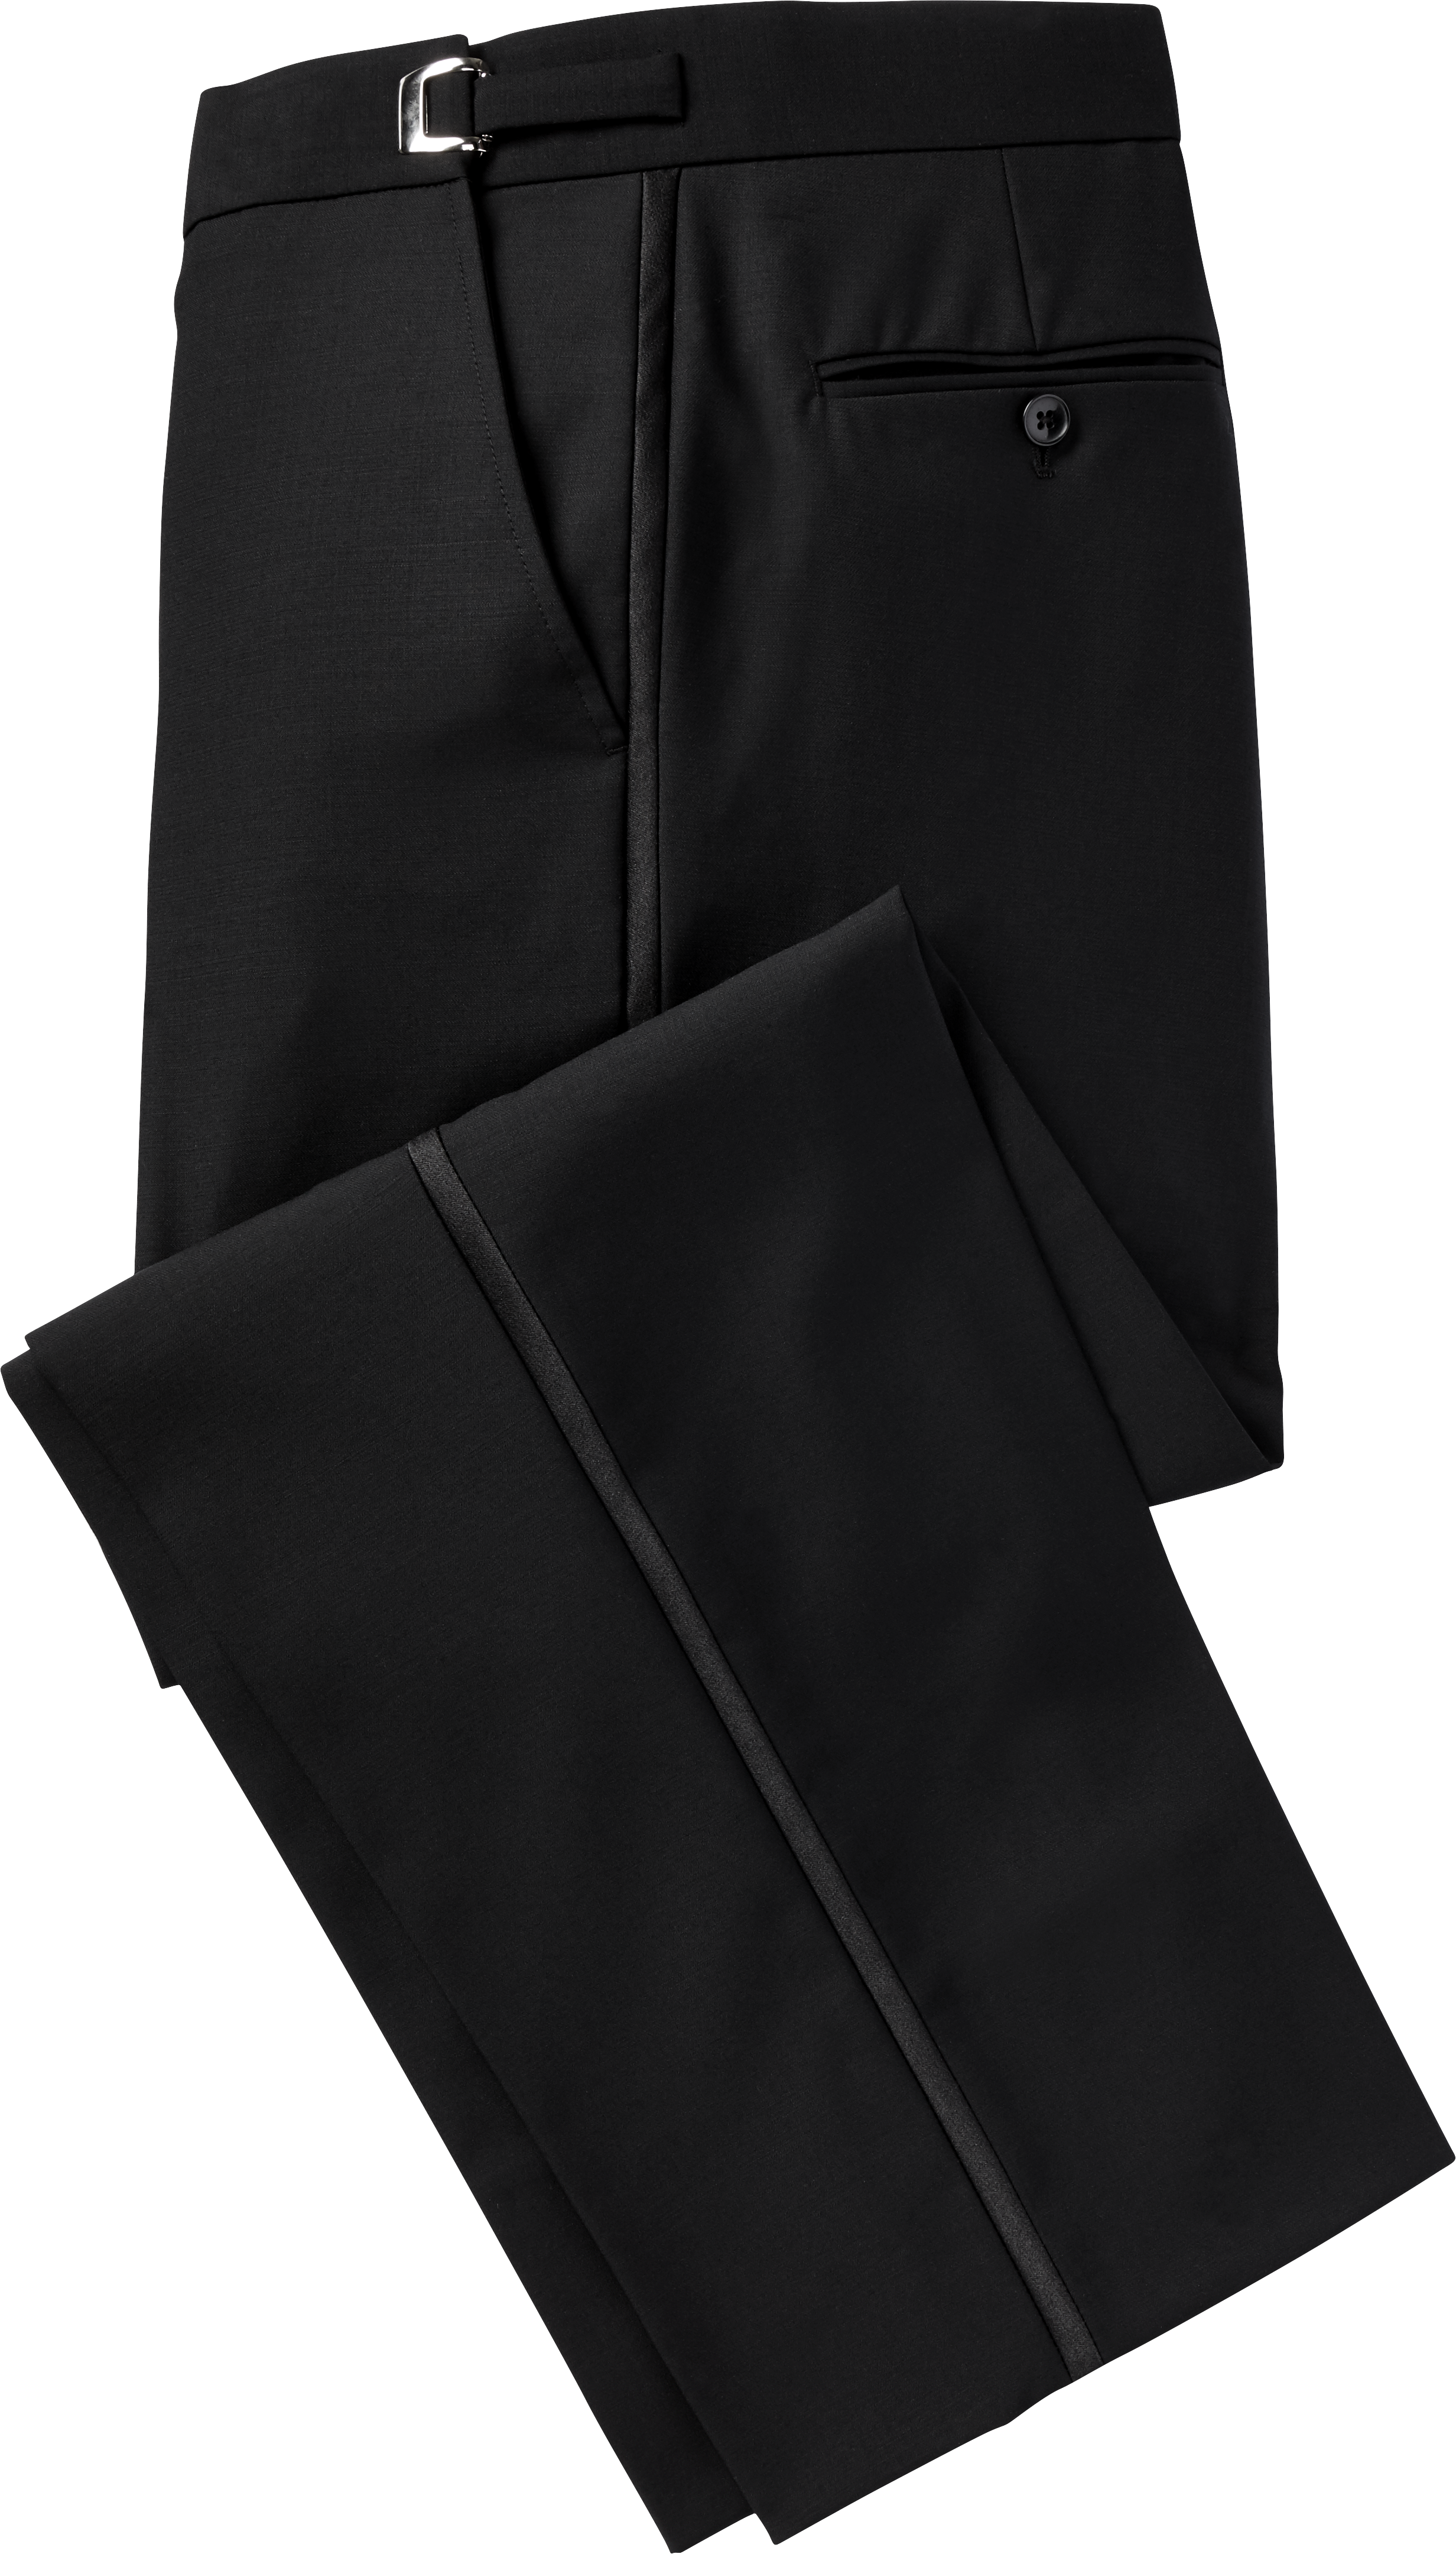 Classic Black Tux by Calvin Klein | Tuxedo Rental | Men's Wearhouse